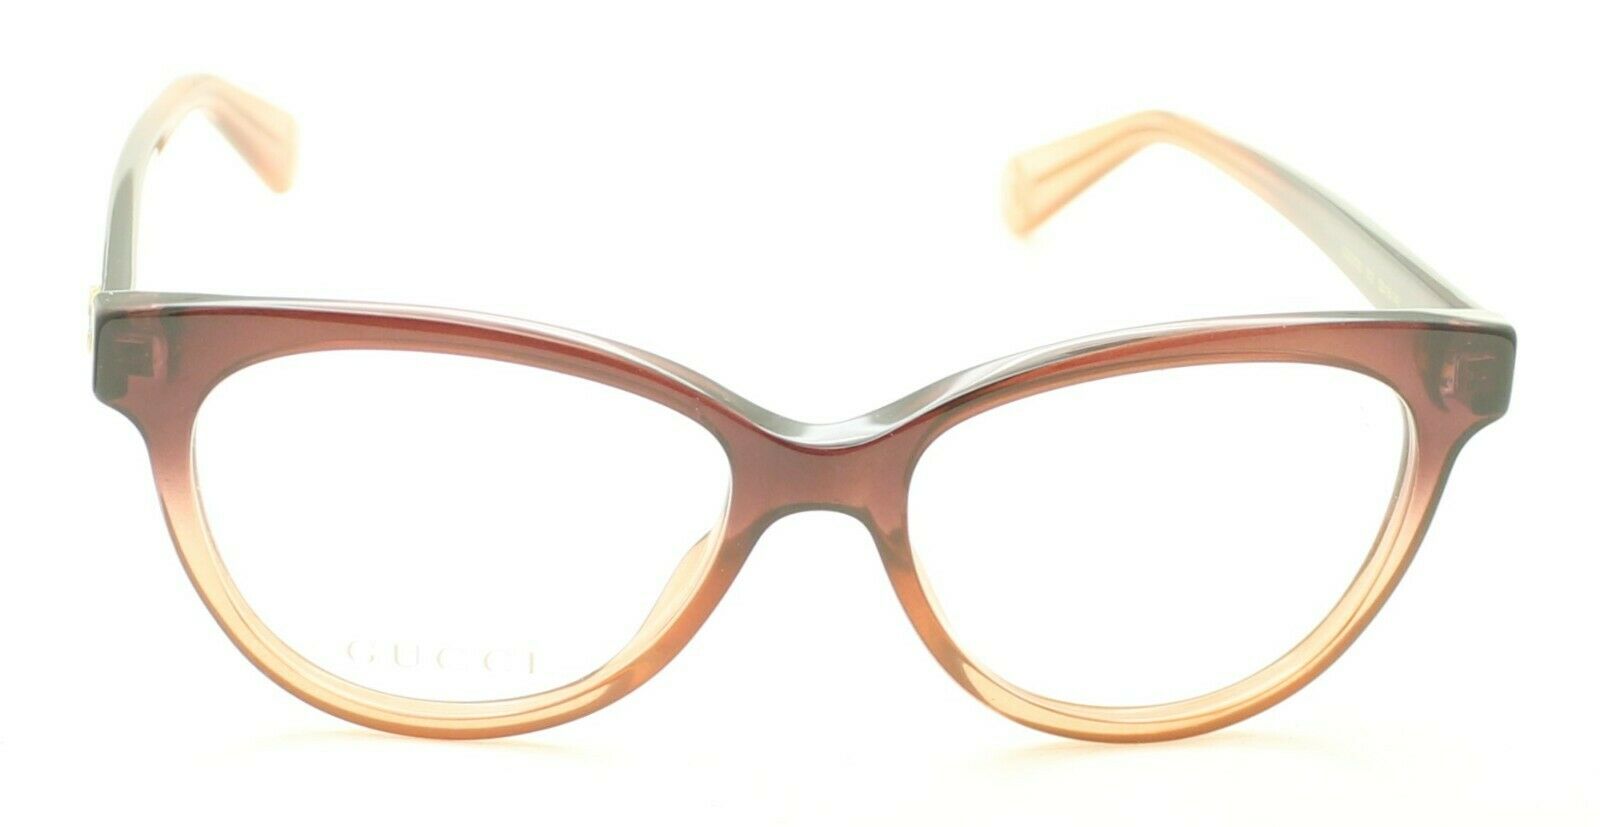 GUCCI GG 0373O 003 52mm Eyewear FRAMES Glasses RX Optical Eyeglasses New - Italy